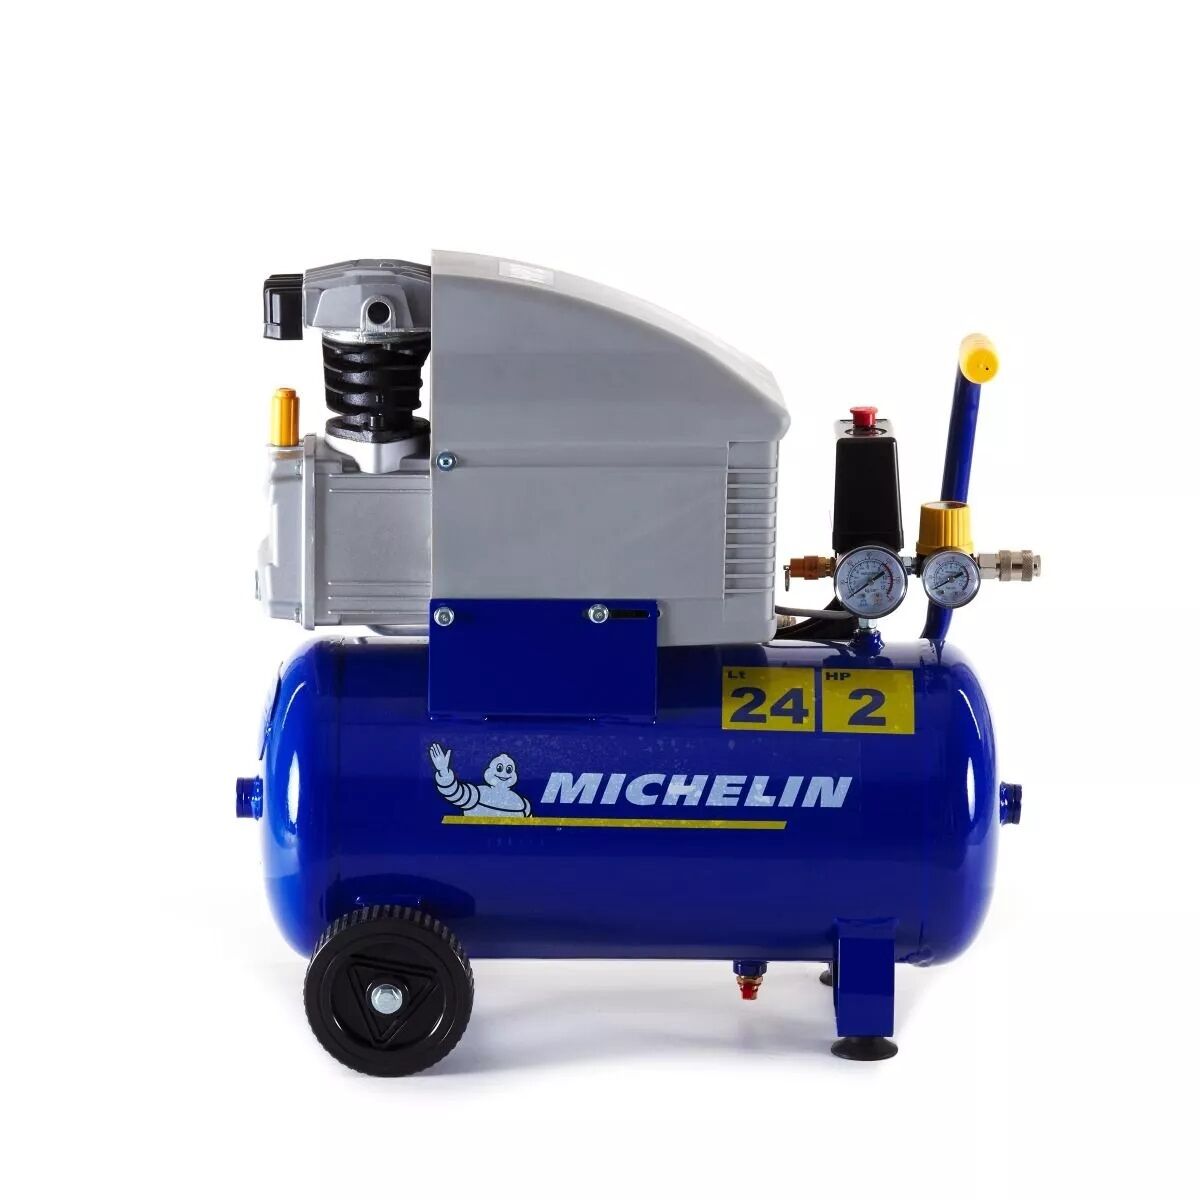 Compresseur Michelin MB24 1,5 HP 24L (230V)